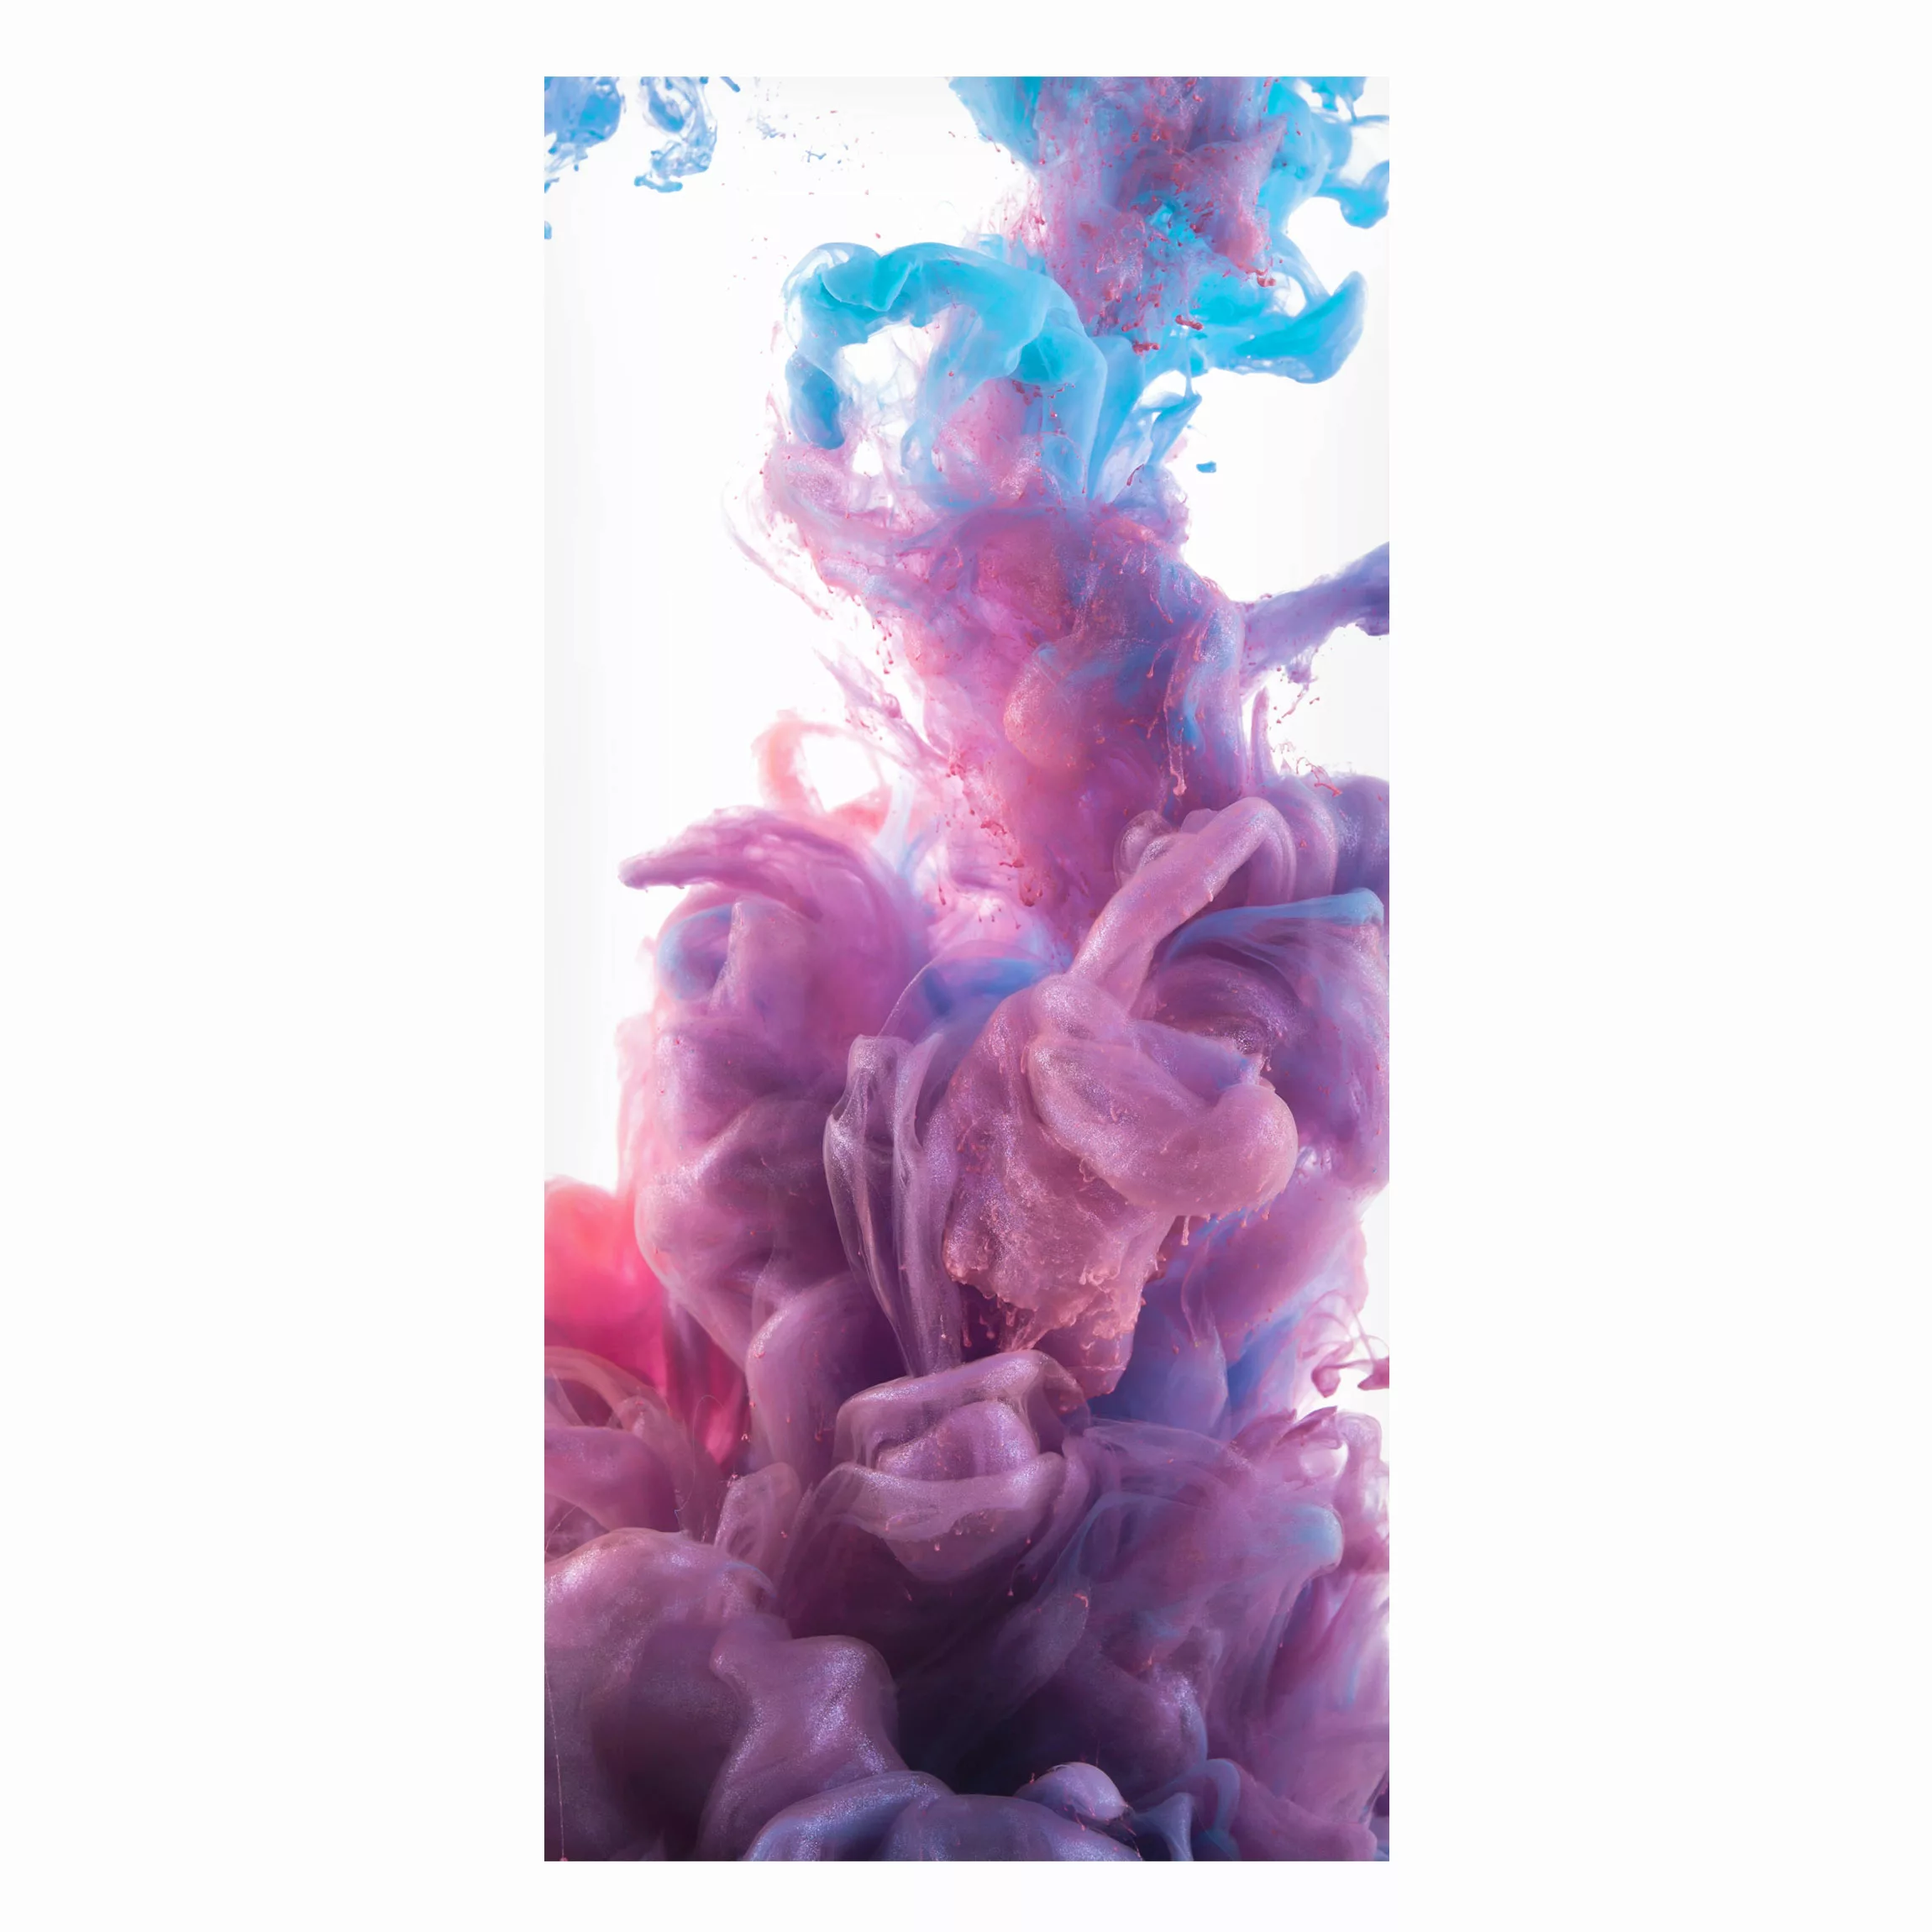 Magnettafel Abstrakt - Hochformat 1:2 Abstrakter flüssiger Farbeffekt günstig online kaufen